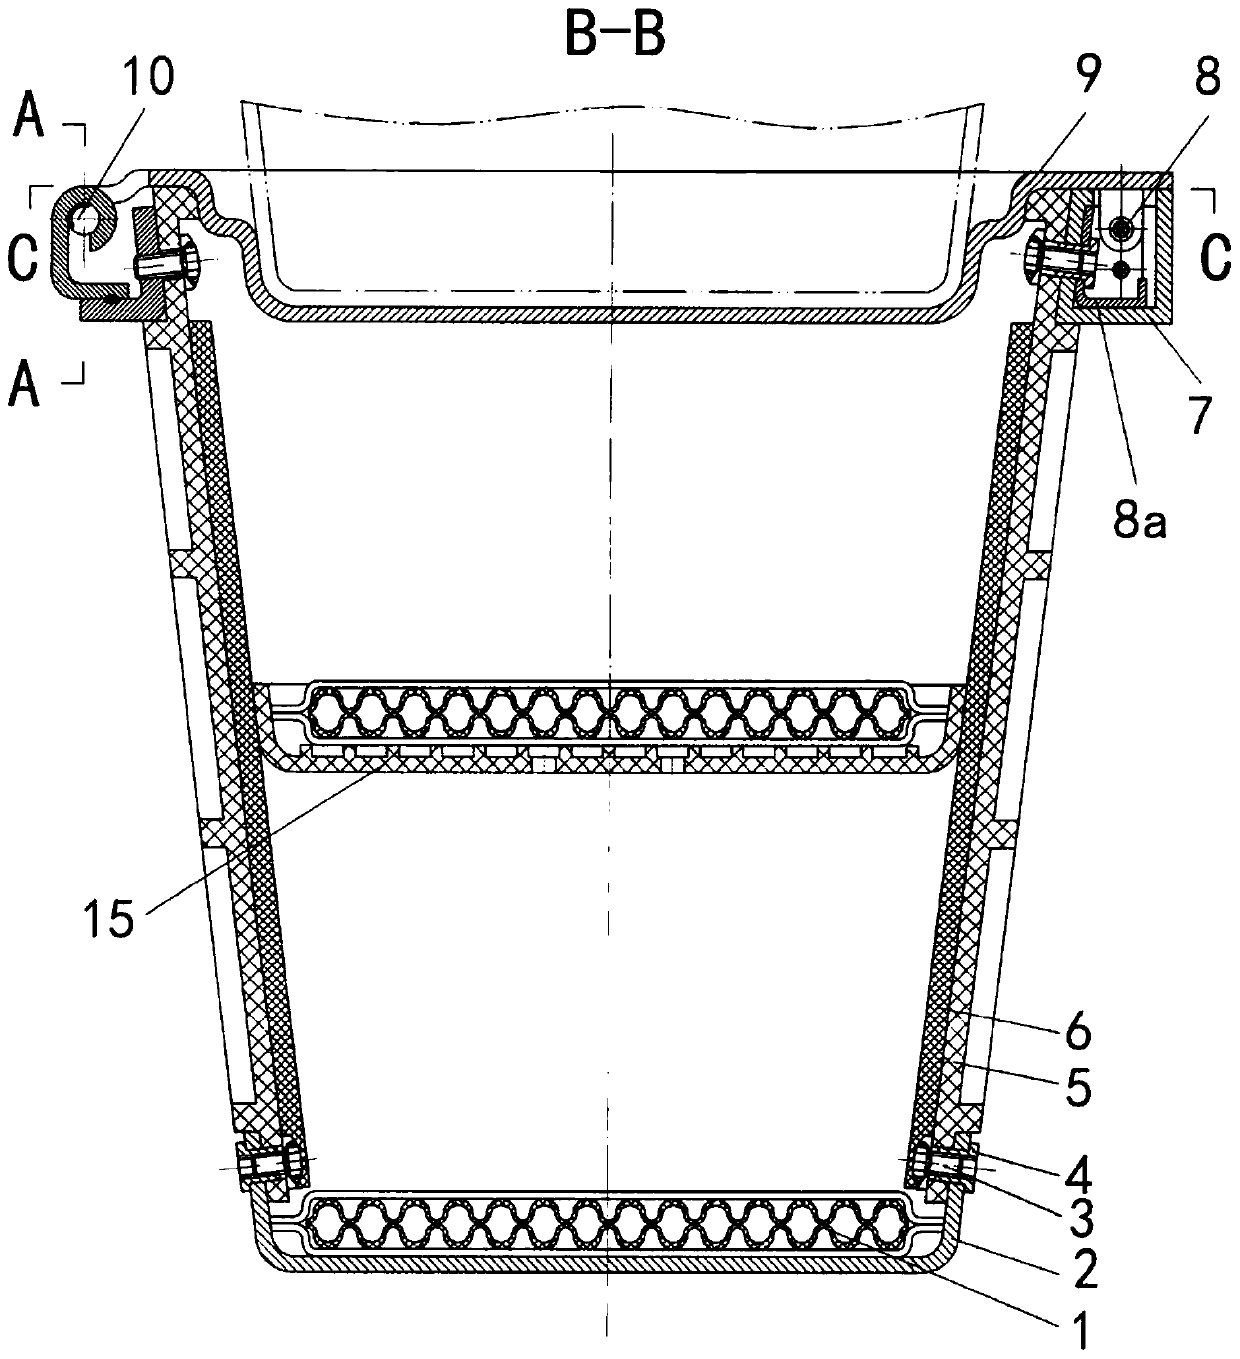 Slanted metal cover bottom operation box with dual sensor rfid and high-strength cushion